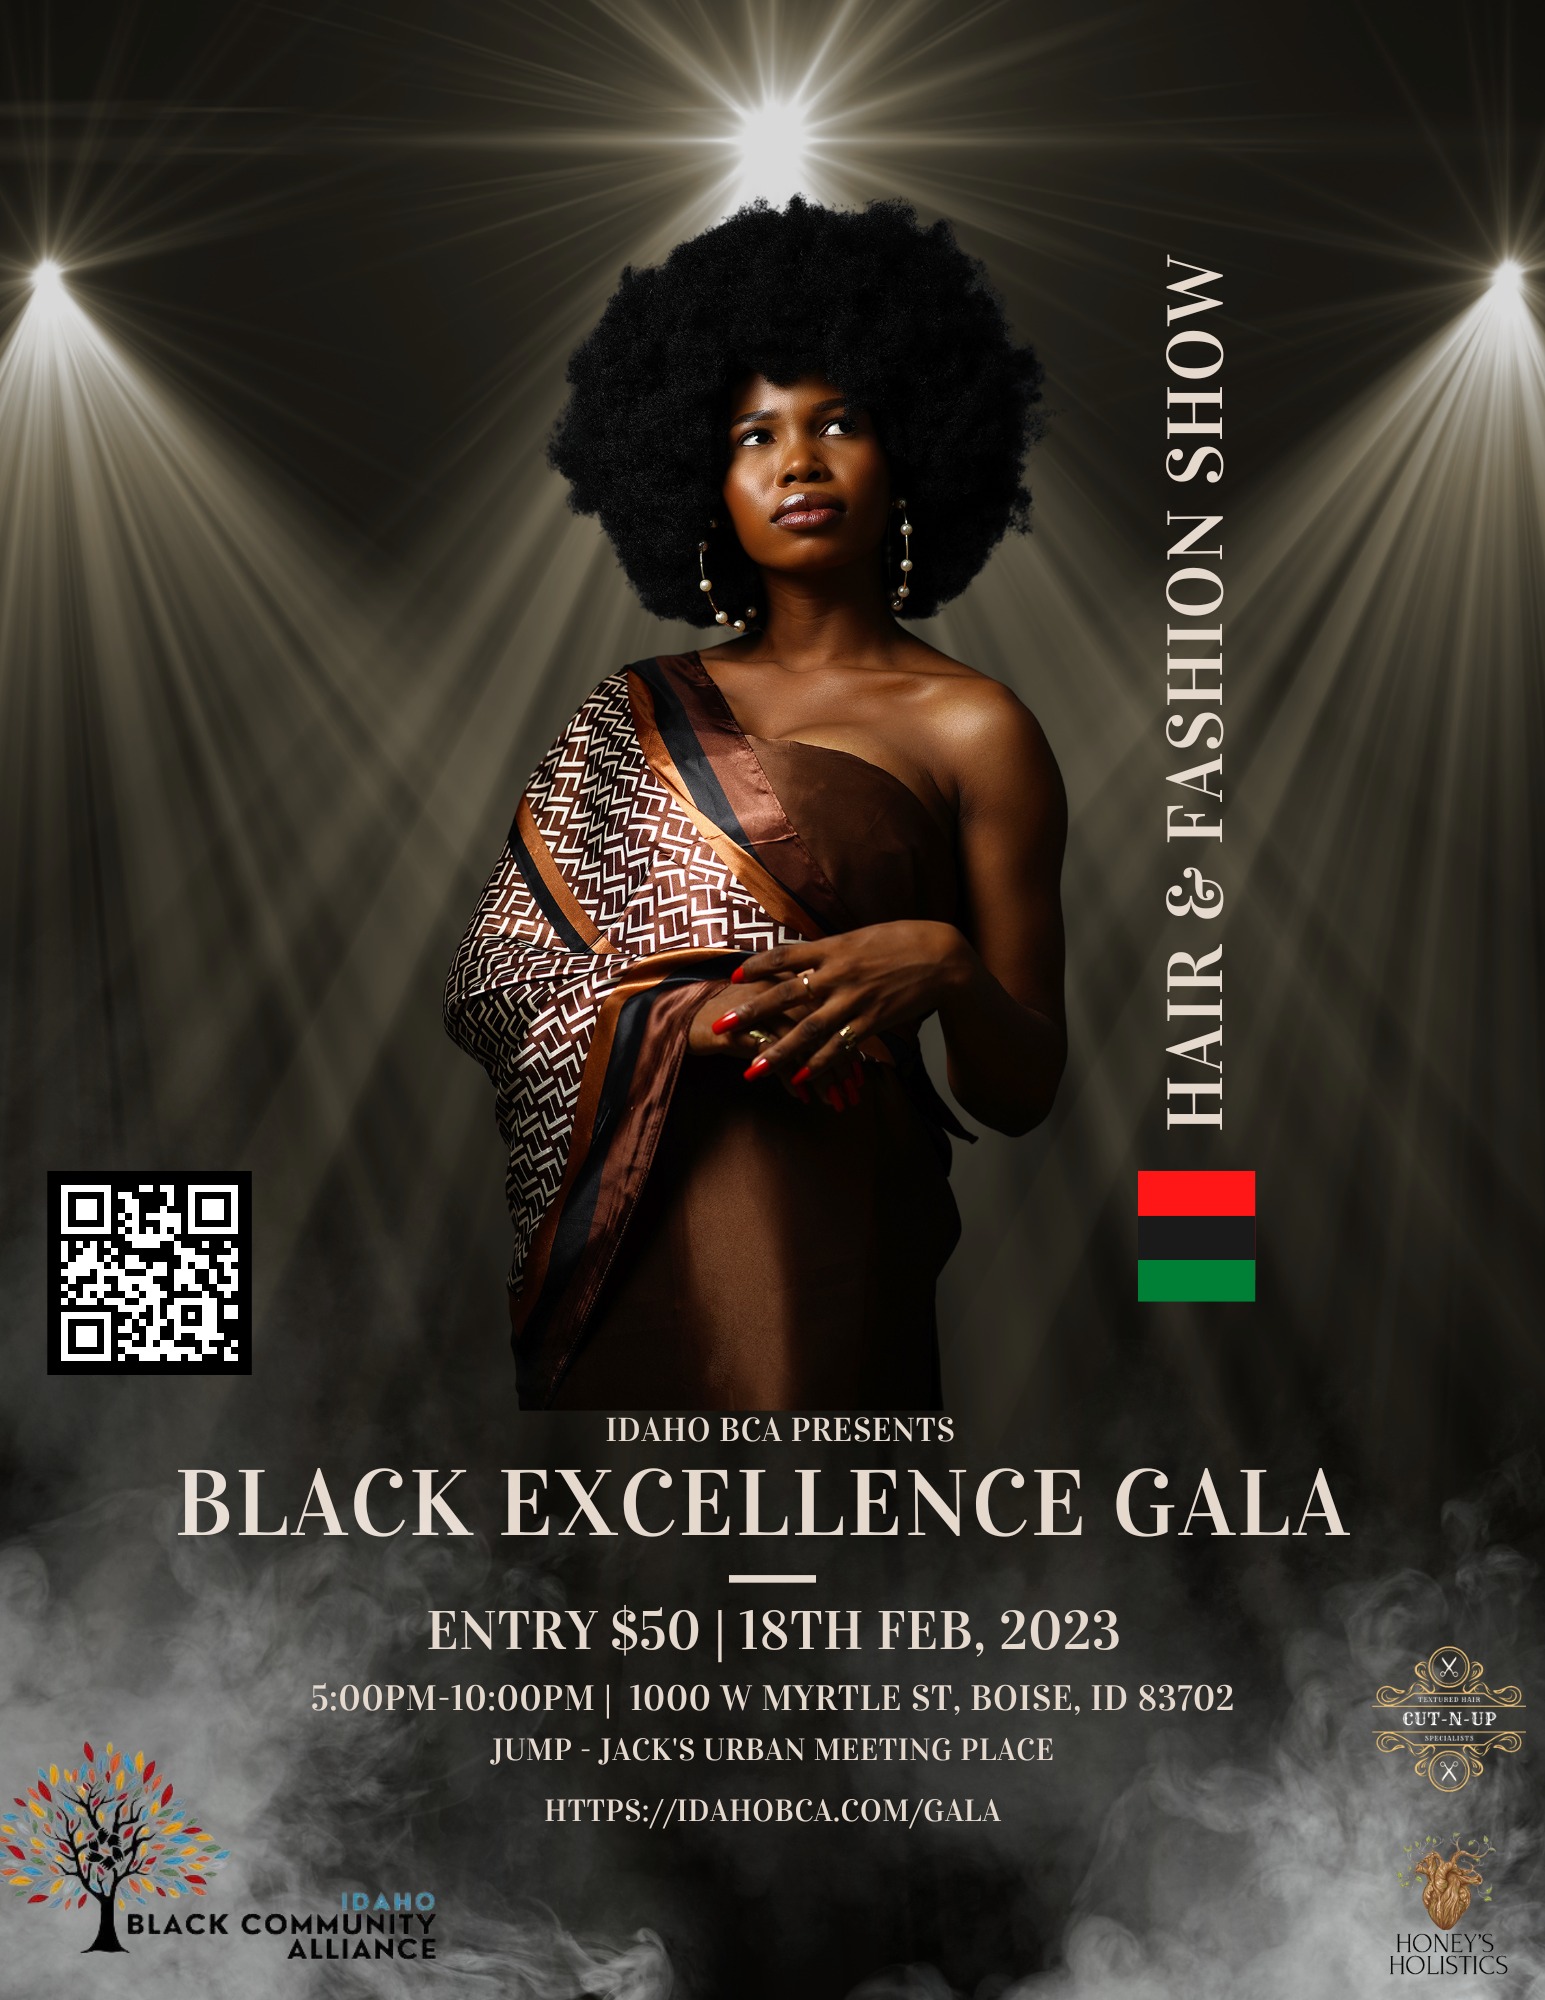 Black Excellence Gala echoX